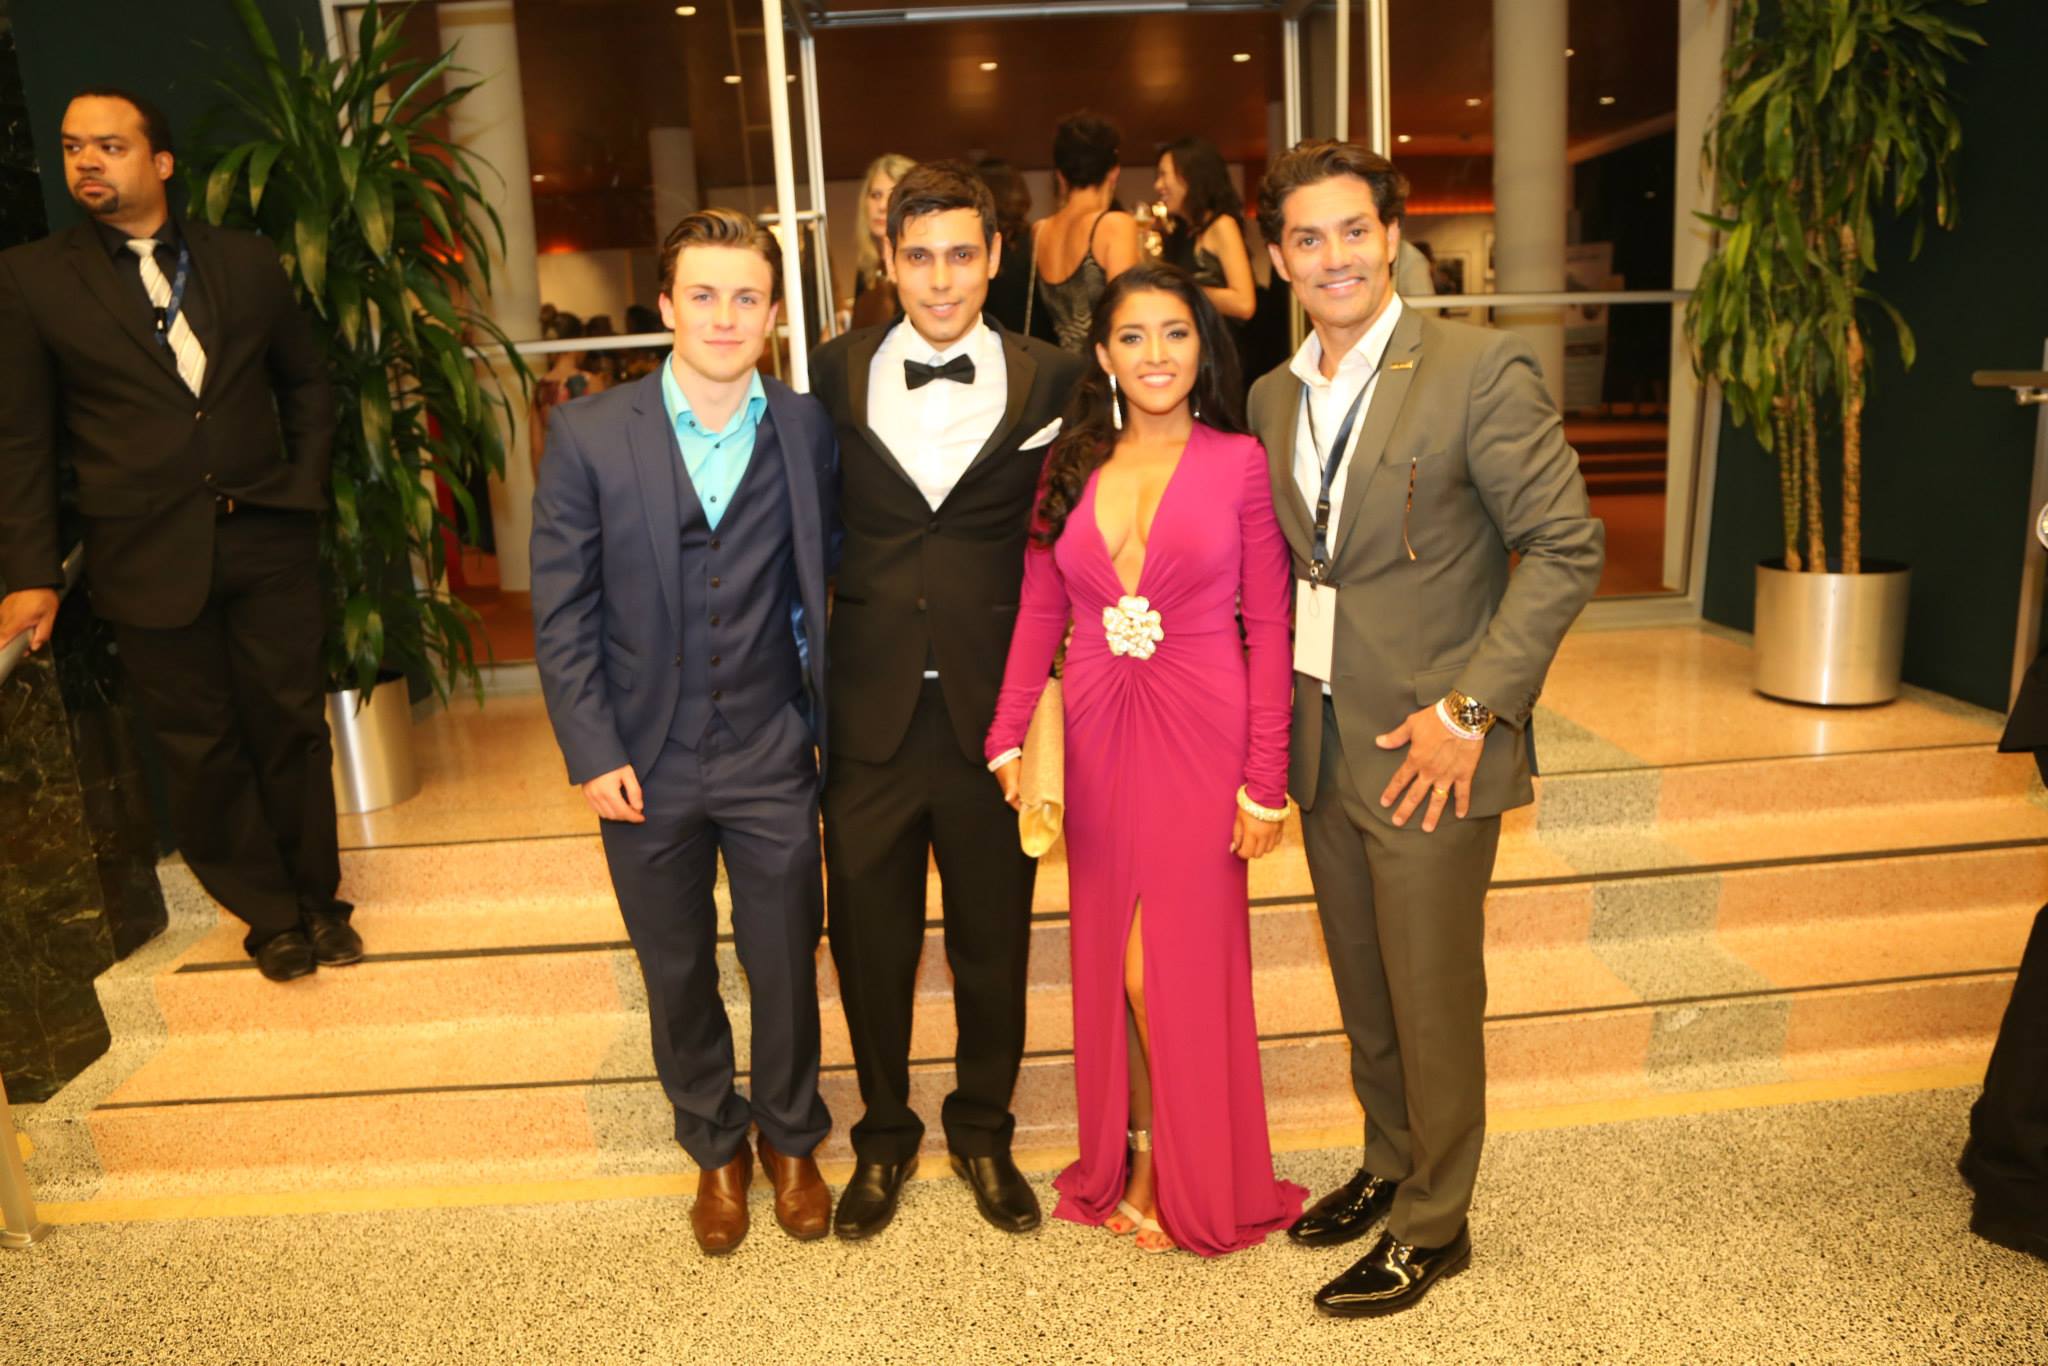 Craig Grainger, Humberto Rosa and Ciara Rose Burke at the premiere of InVOKED in Los Angeles.